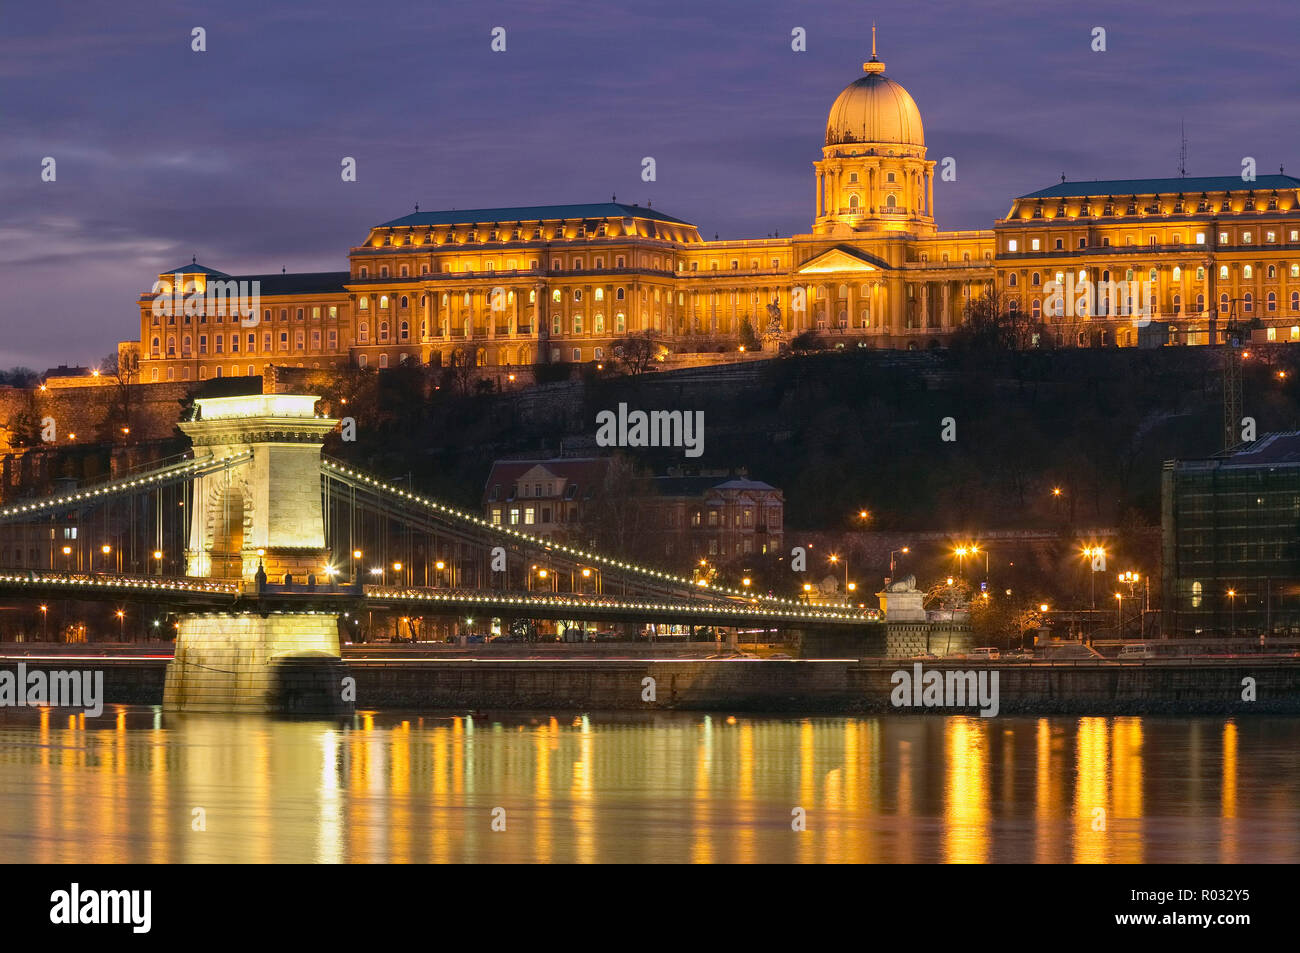 Chain Bridge and Royal Palace reflected in River Danube illuminated at dusk, Budapest, Hungary Stock Photo